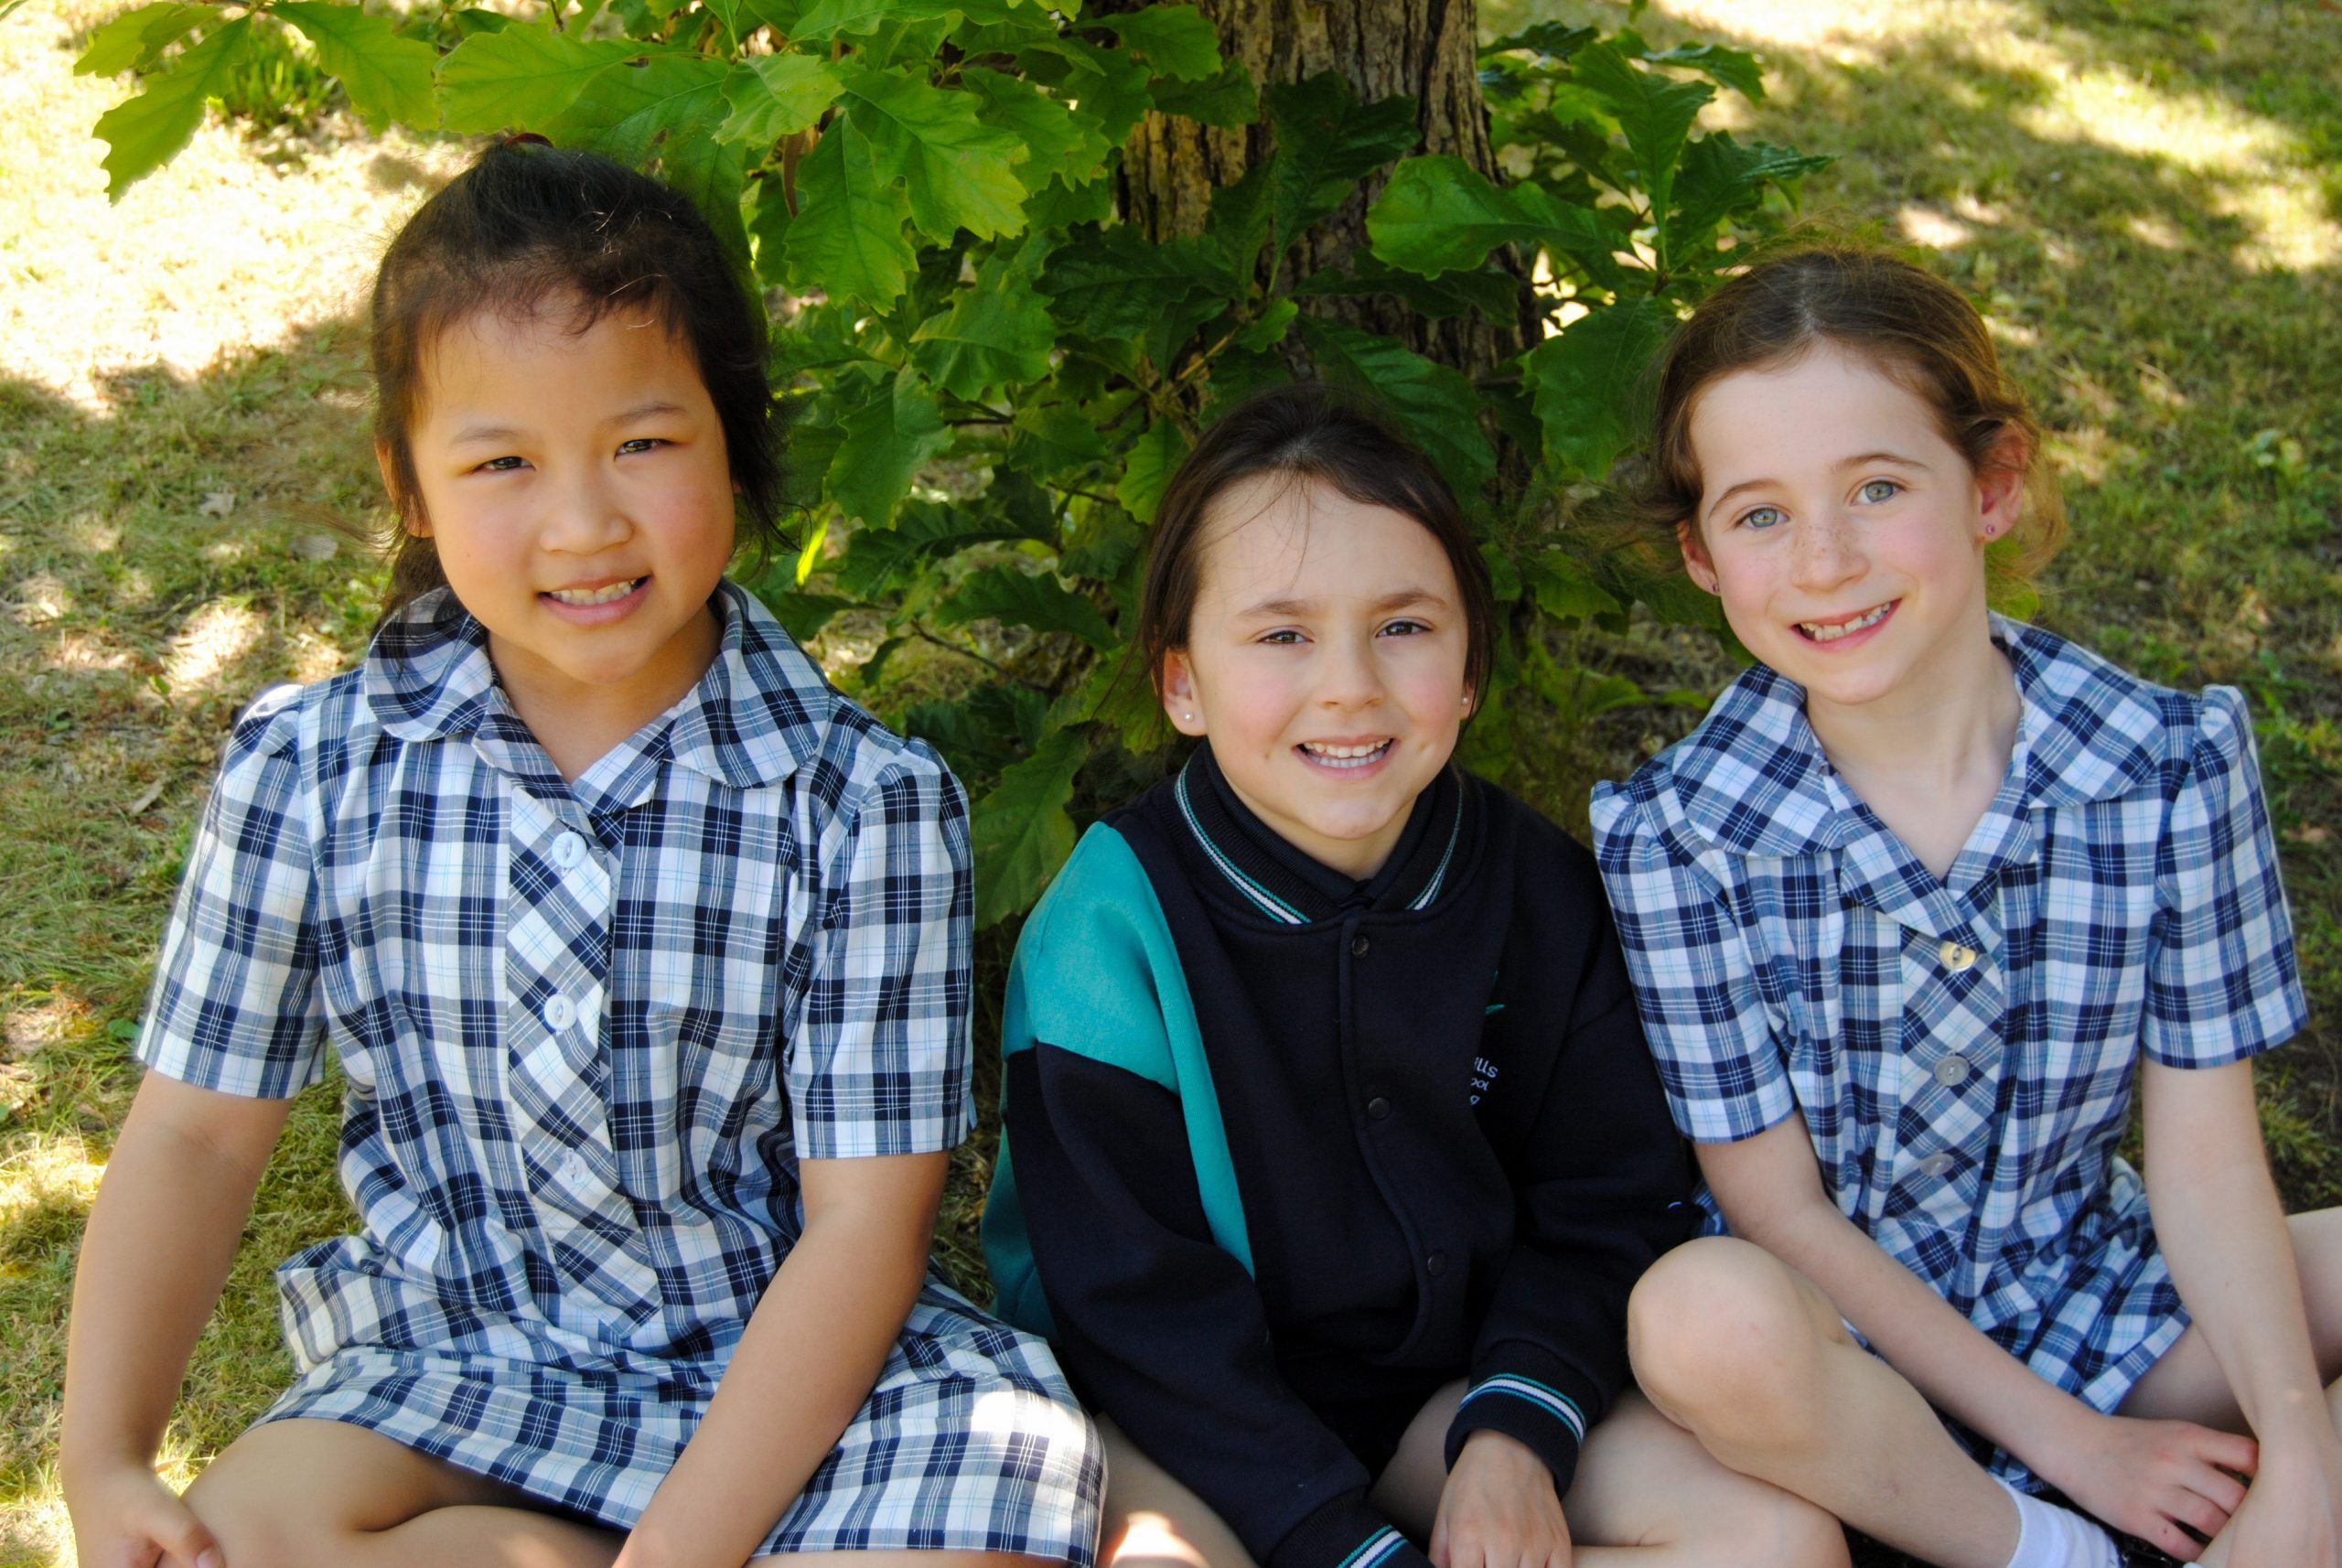 Pakenham Hills Primary School - Mission Statement and Community Values